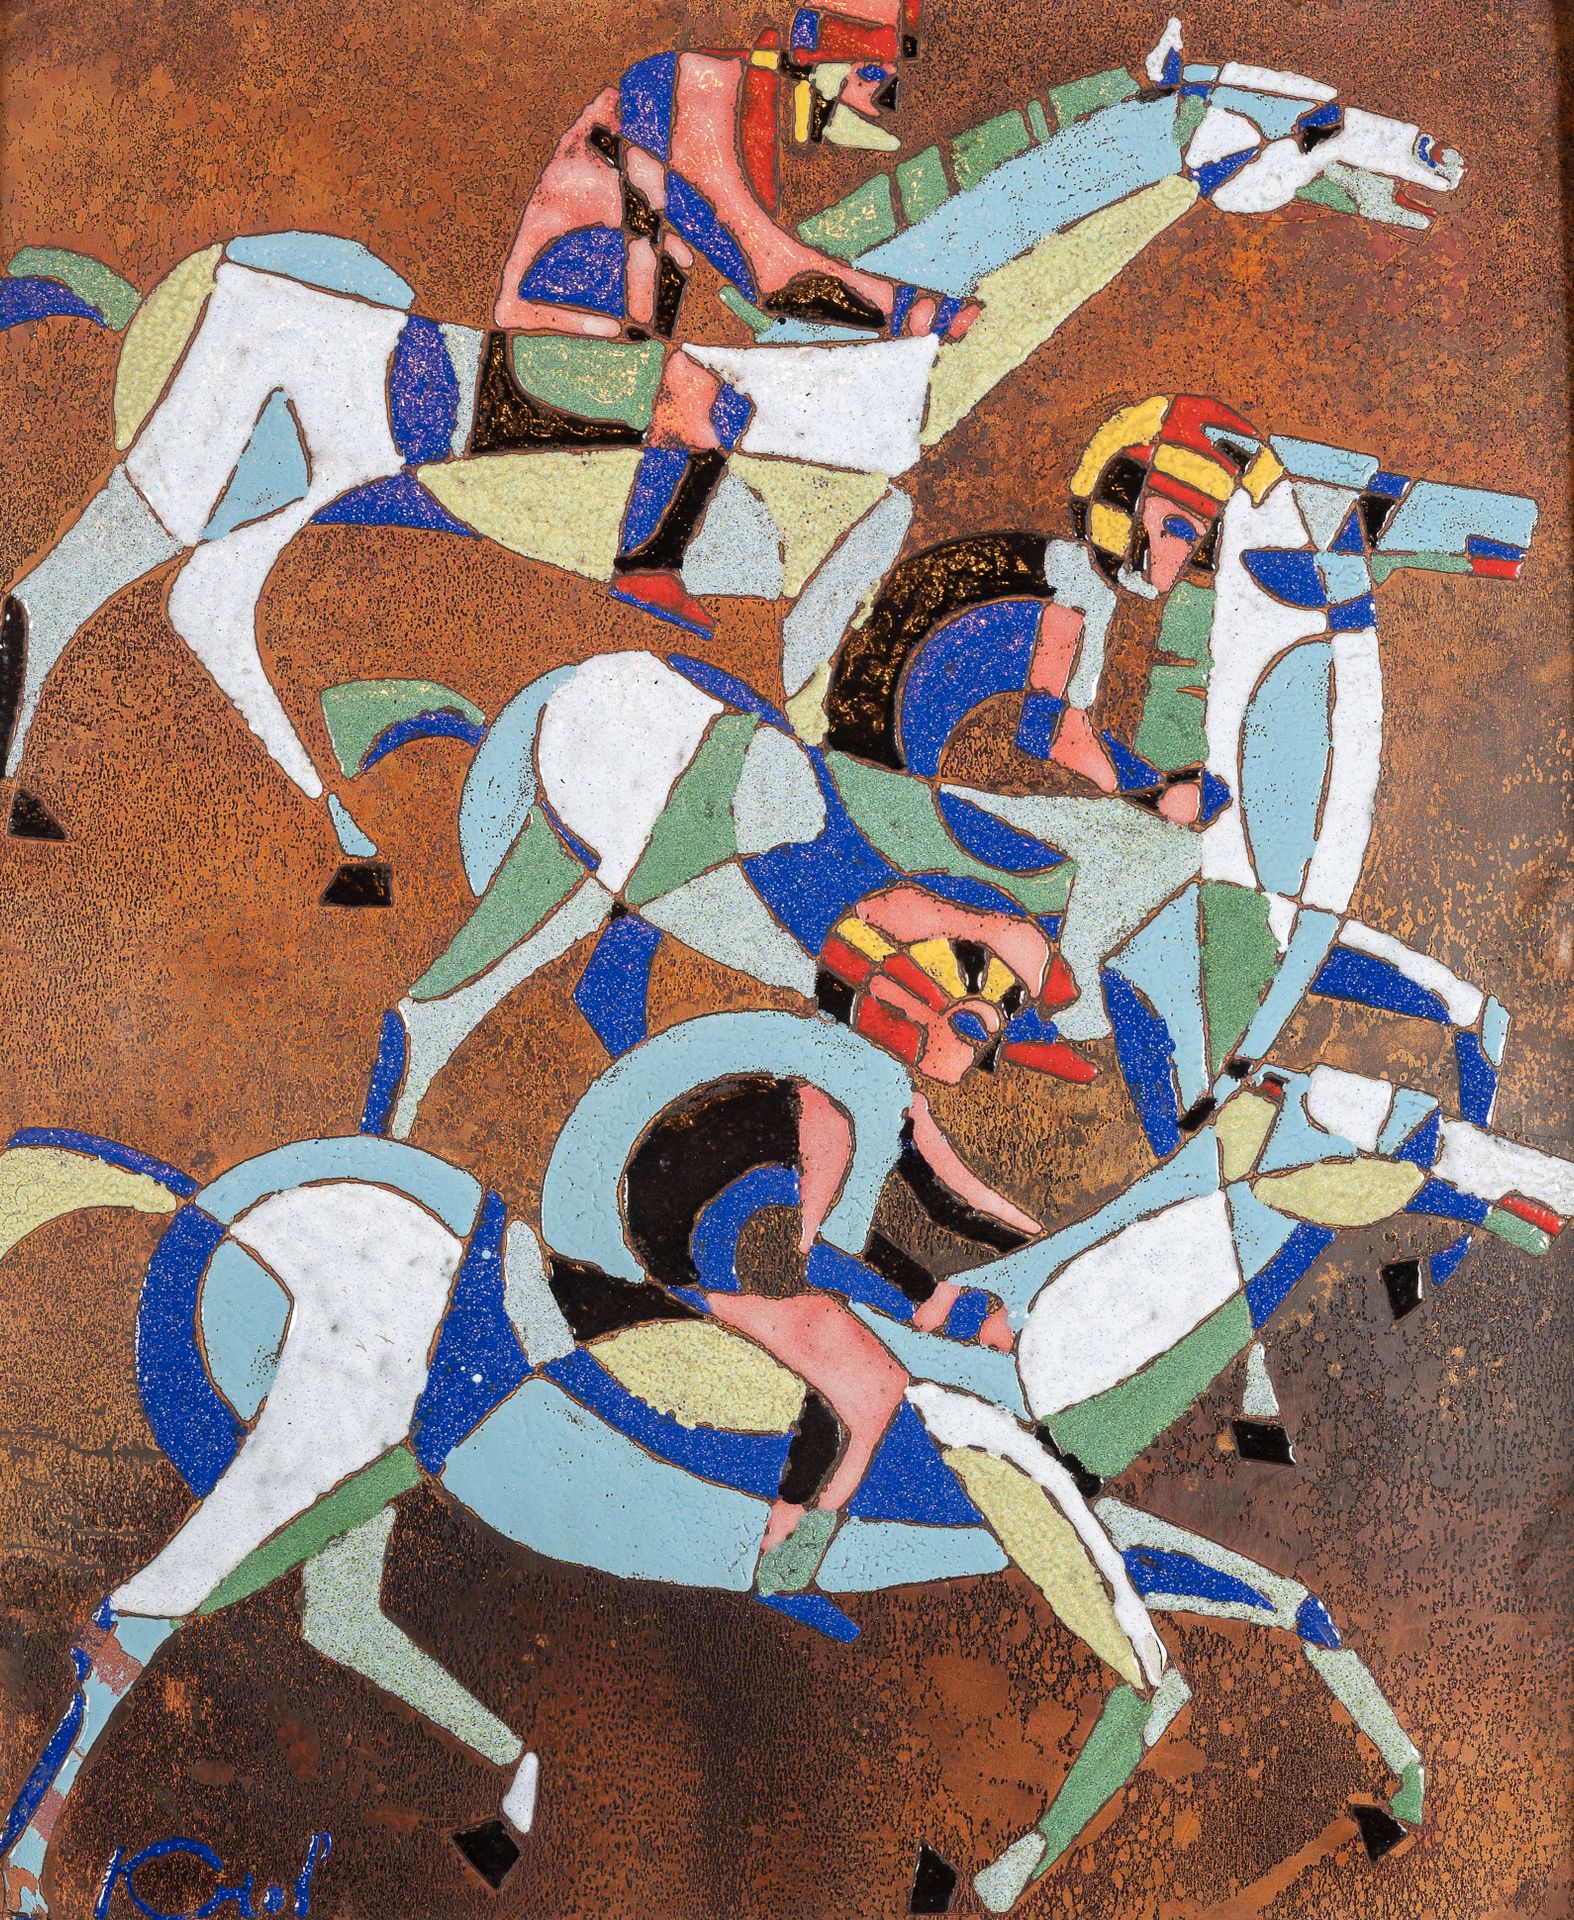 Null 亚伯拉罕-克罗尔(1919-2005)

赛马

画板上的珐琅

38 x 31 cm